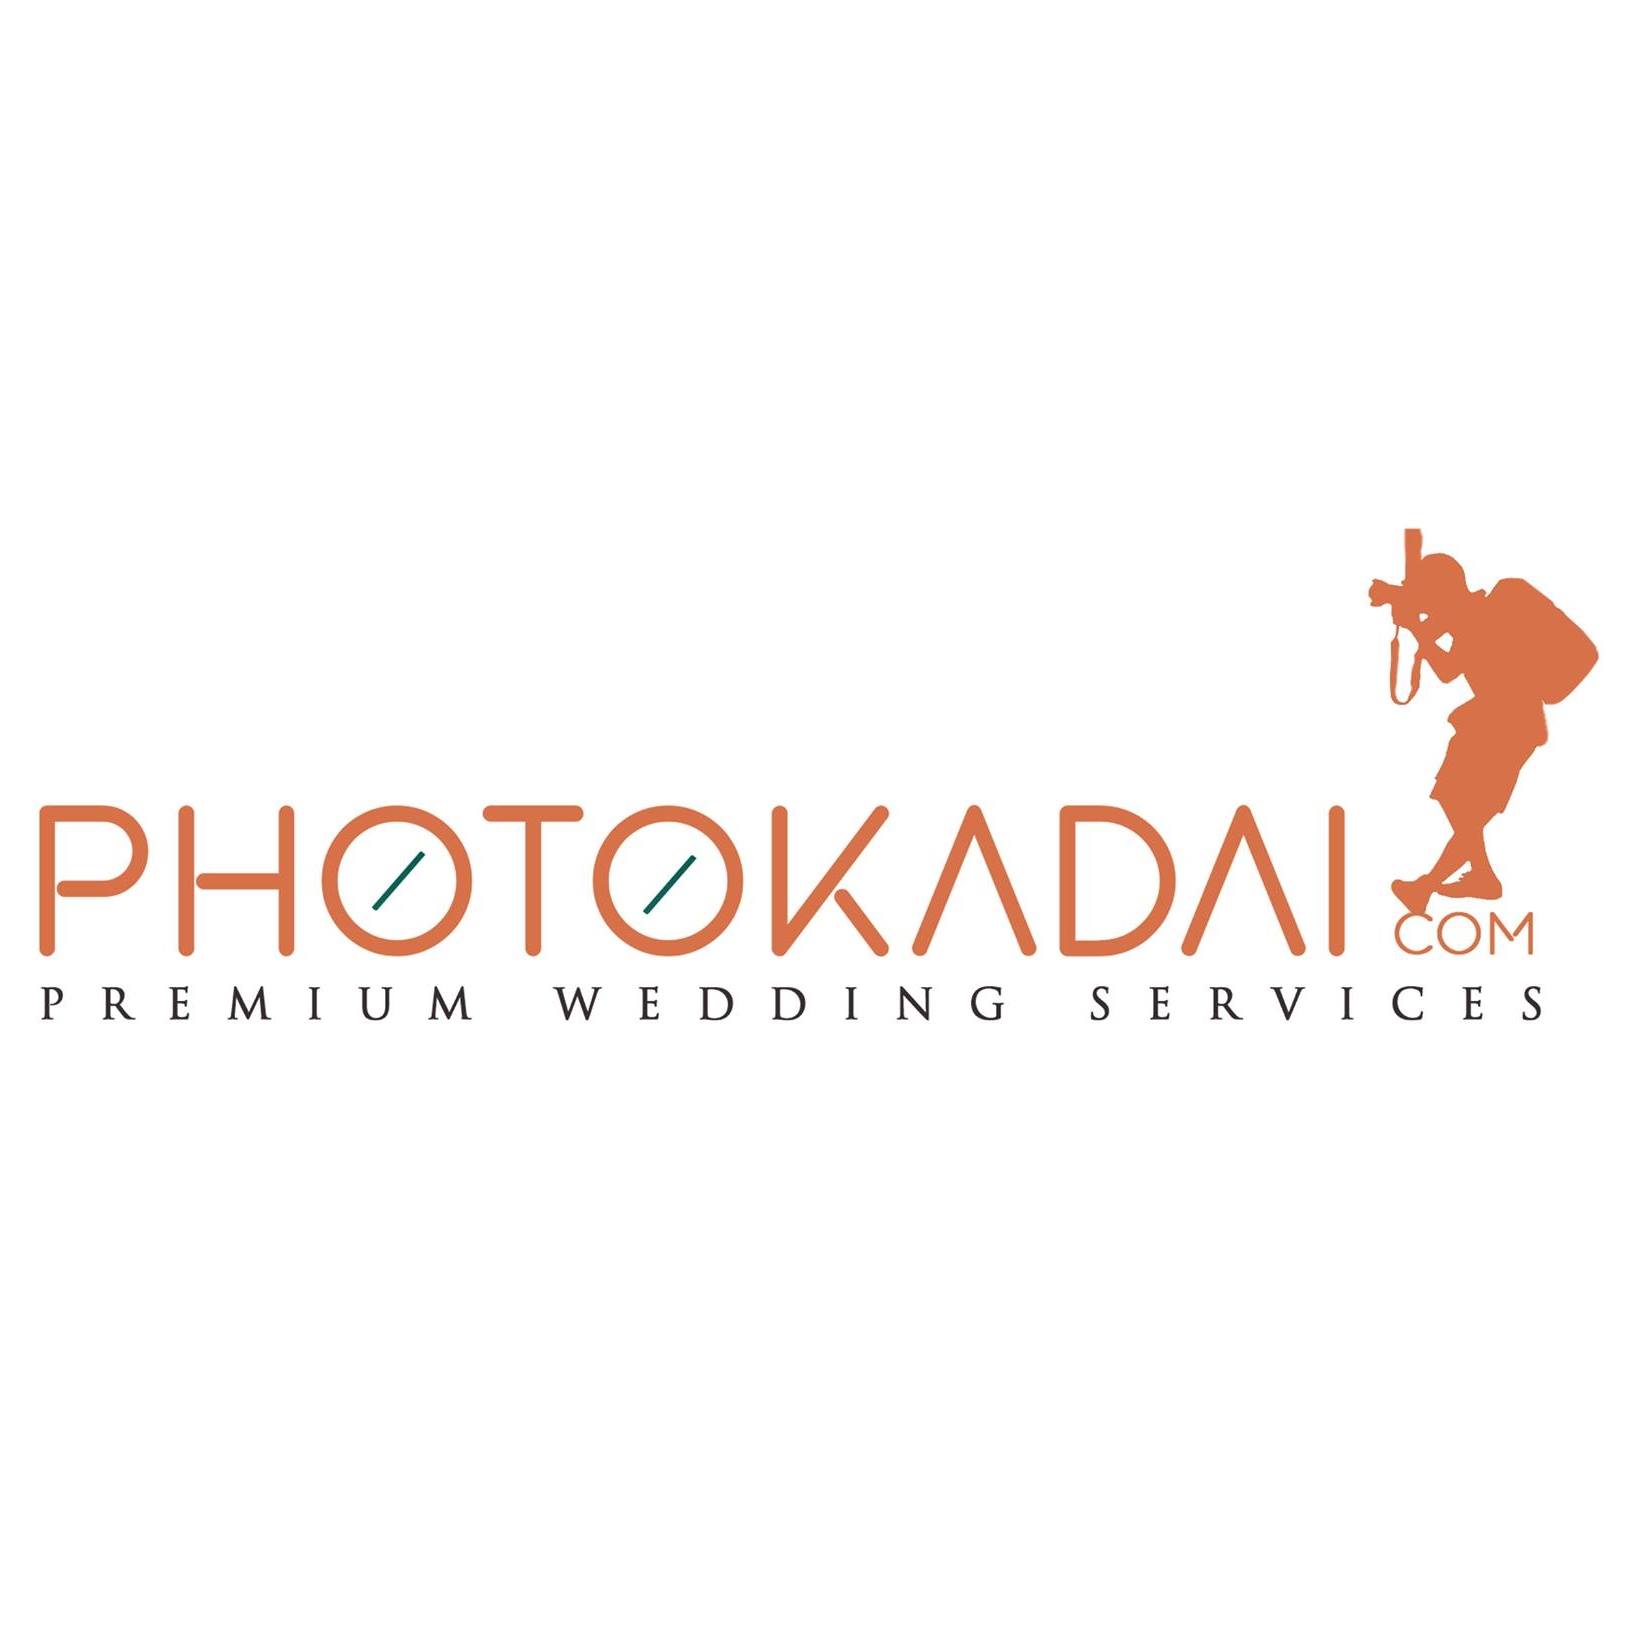 Photokadai creative candid photographer|Catering Services|Event Services